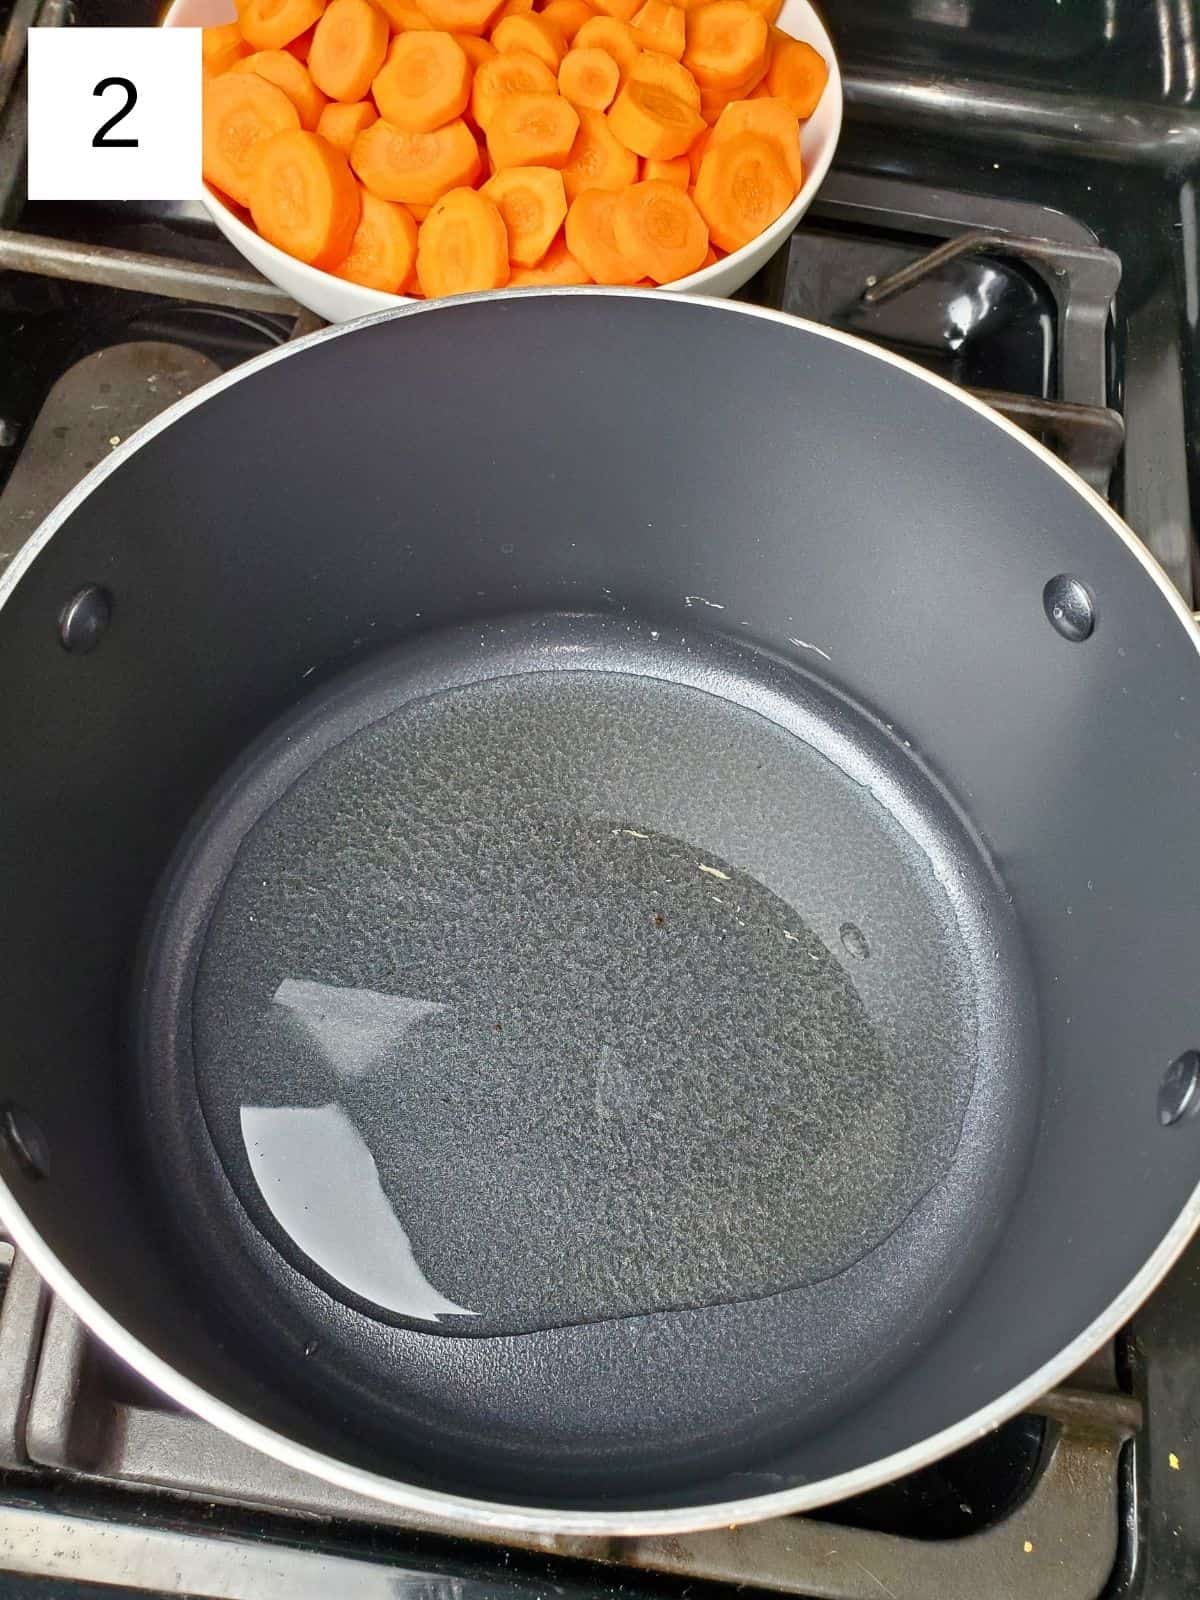 warming oil in a pot.